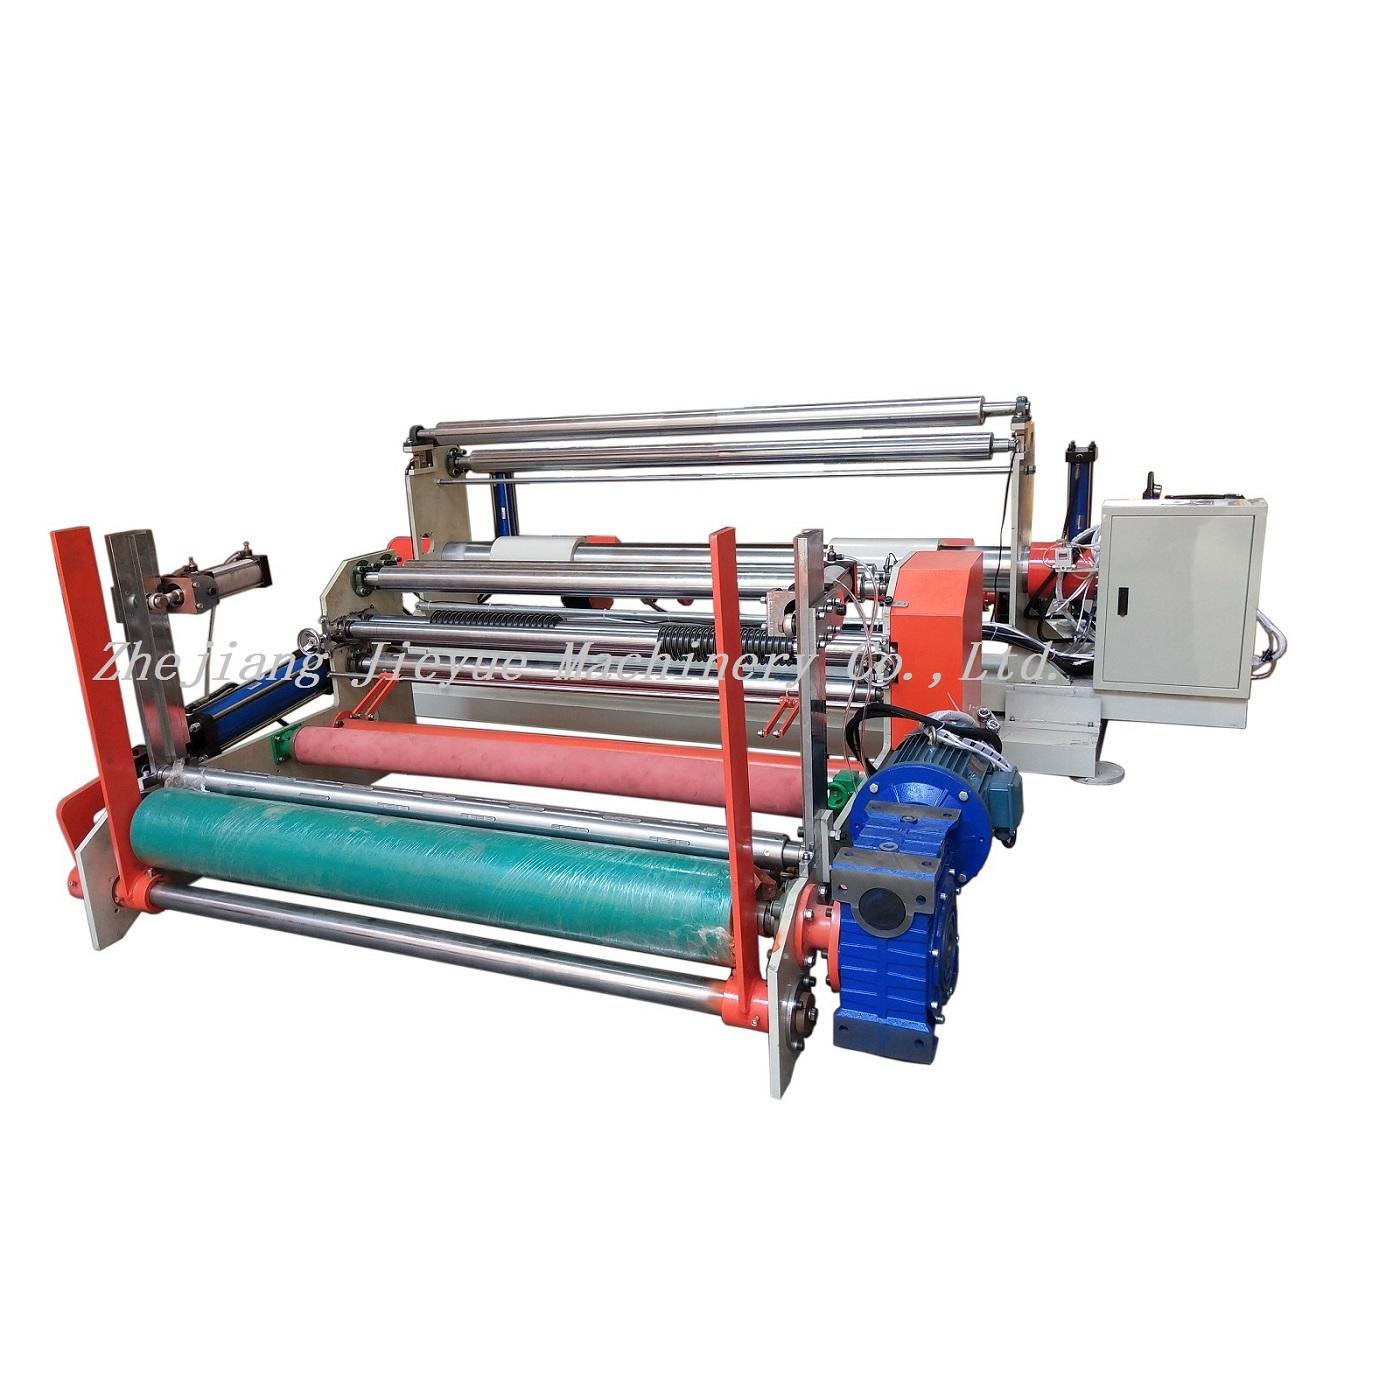 High quality jumbo roll kraft paper slitter rewinder machine for industry paper slitting rewinding